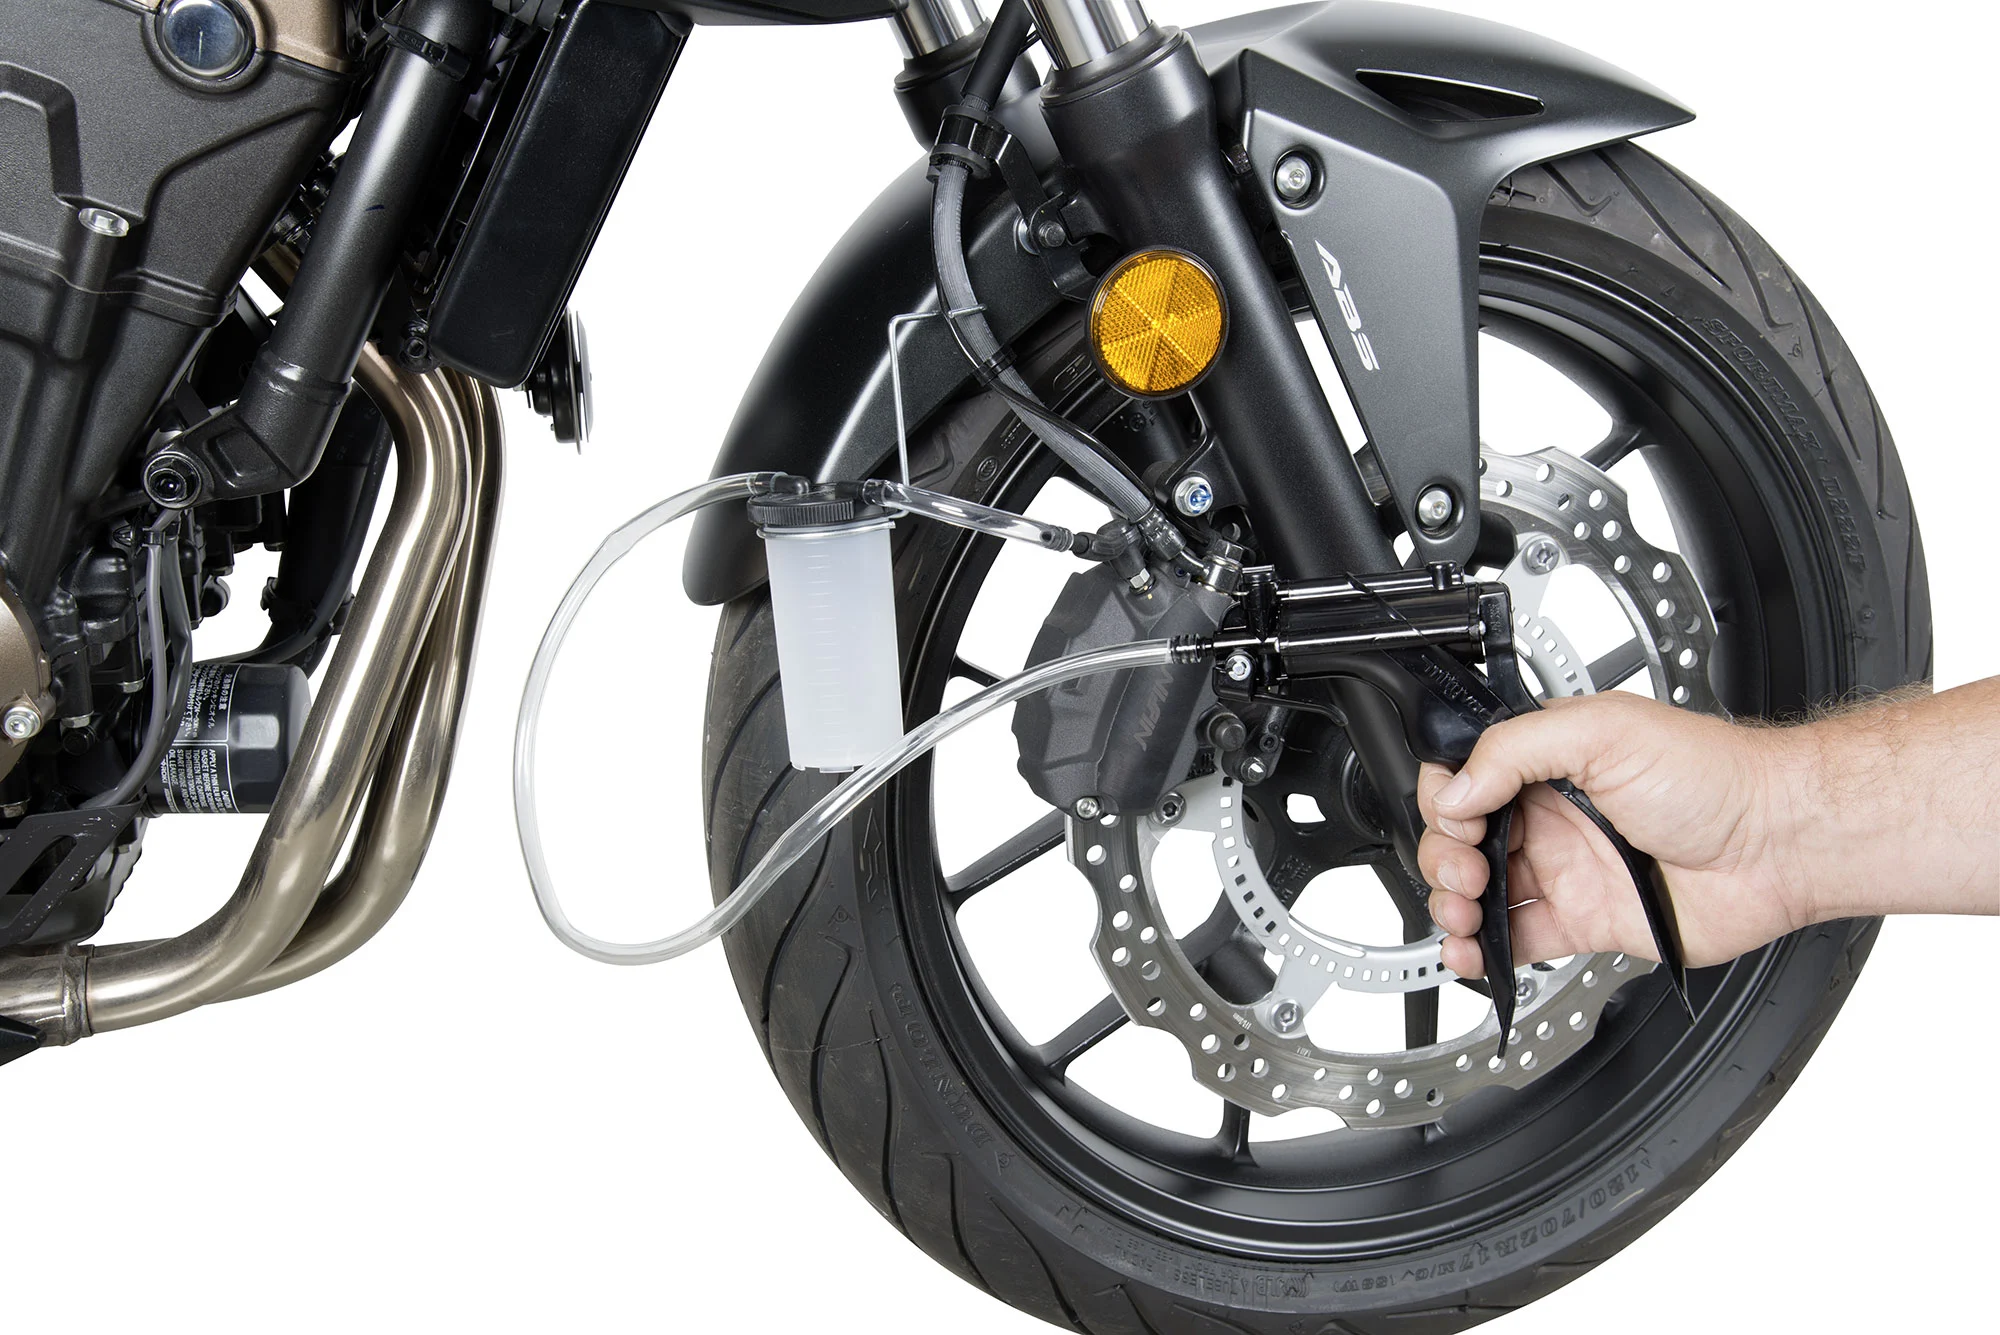 HASKYY Bremsenentlüftungsgerät Vakuumpumpe Bremsenentlüfter Set für Auto  Motorrad Hand Vakuumtester, Bremseninstan​dsetzung, Werkzeuge